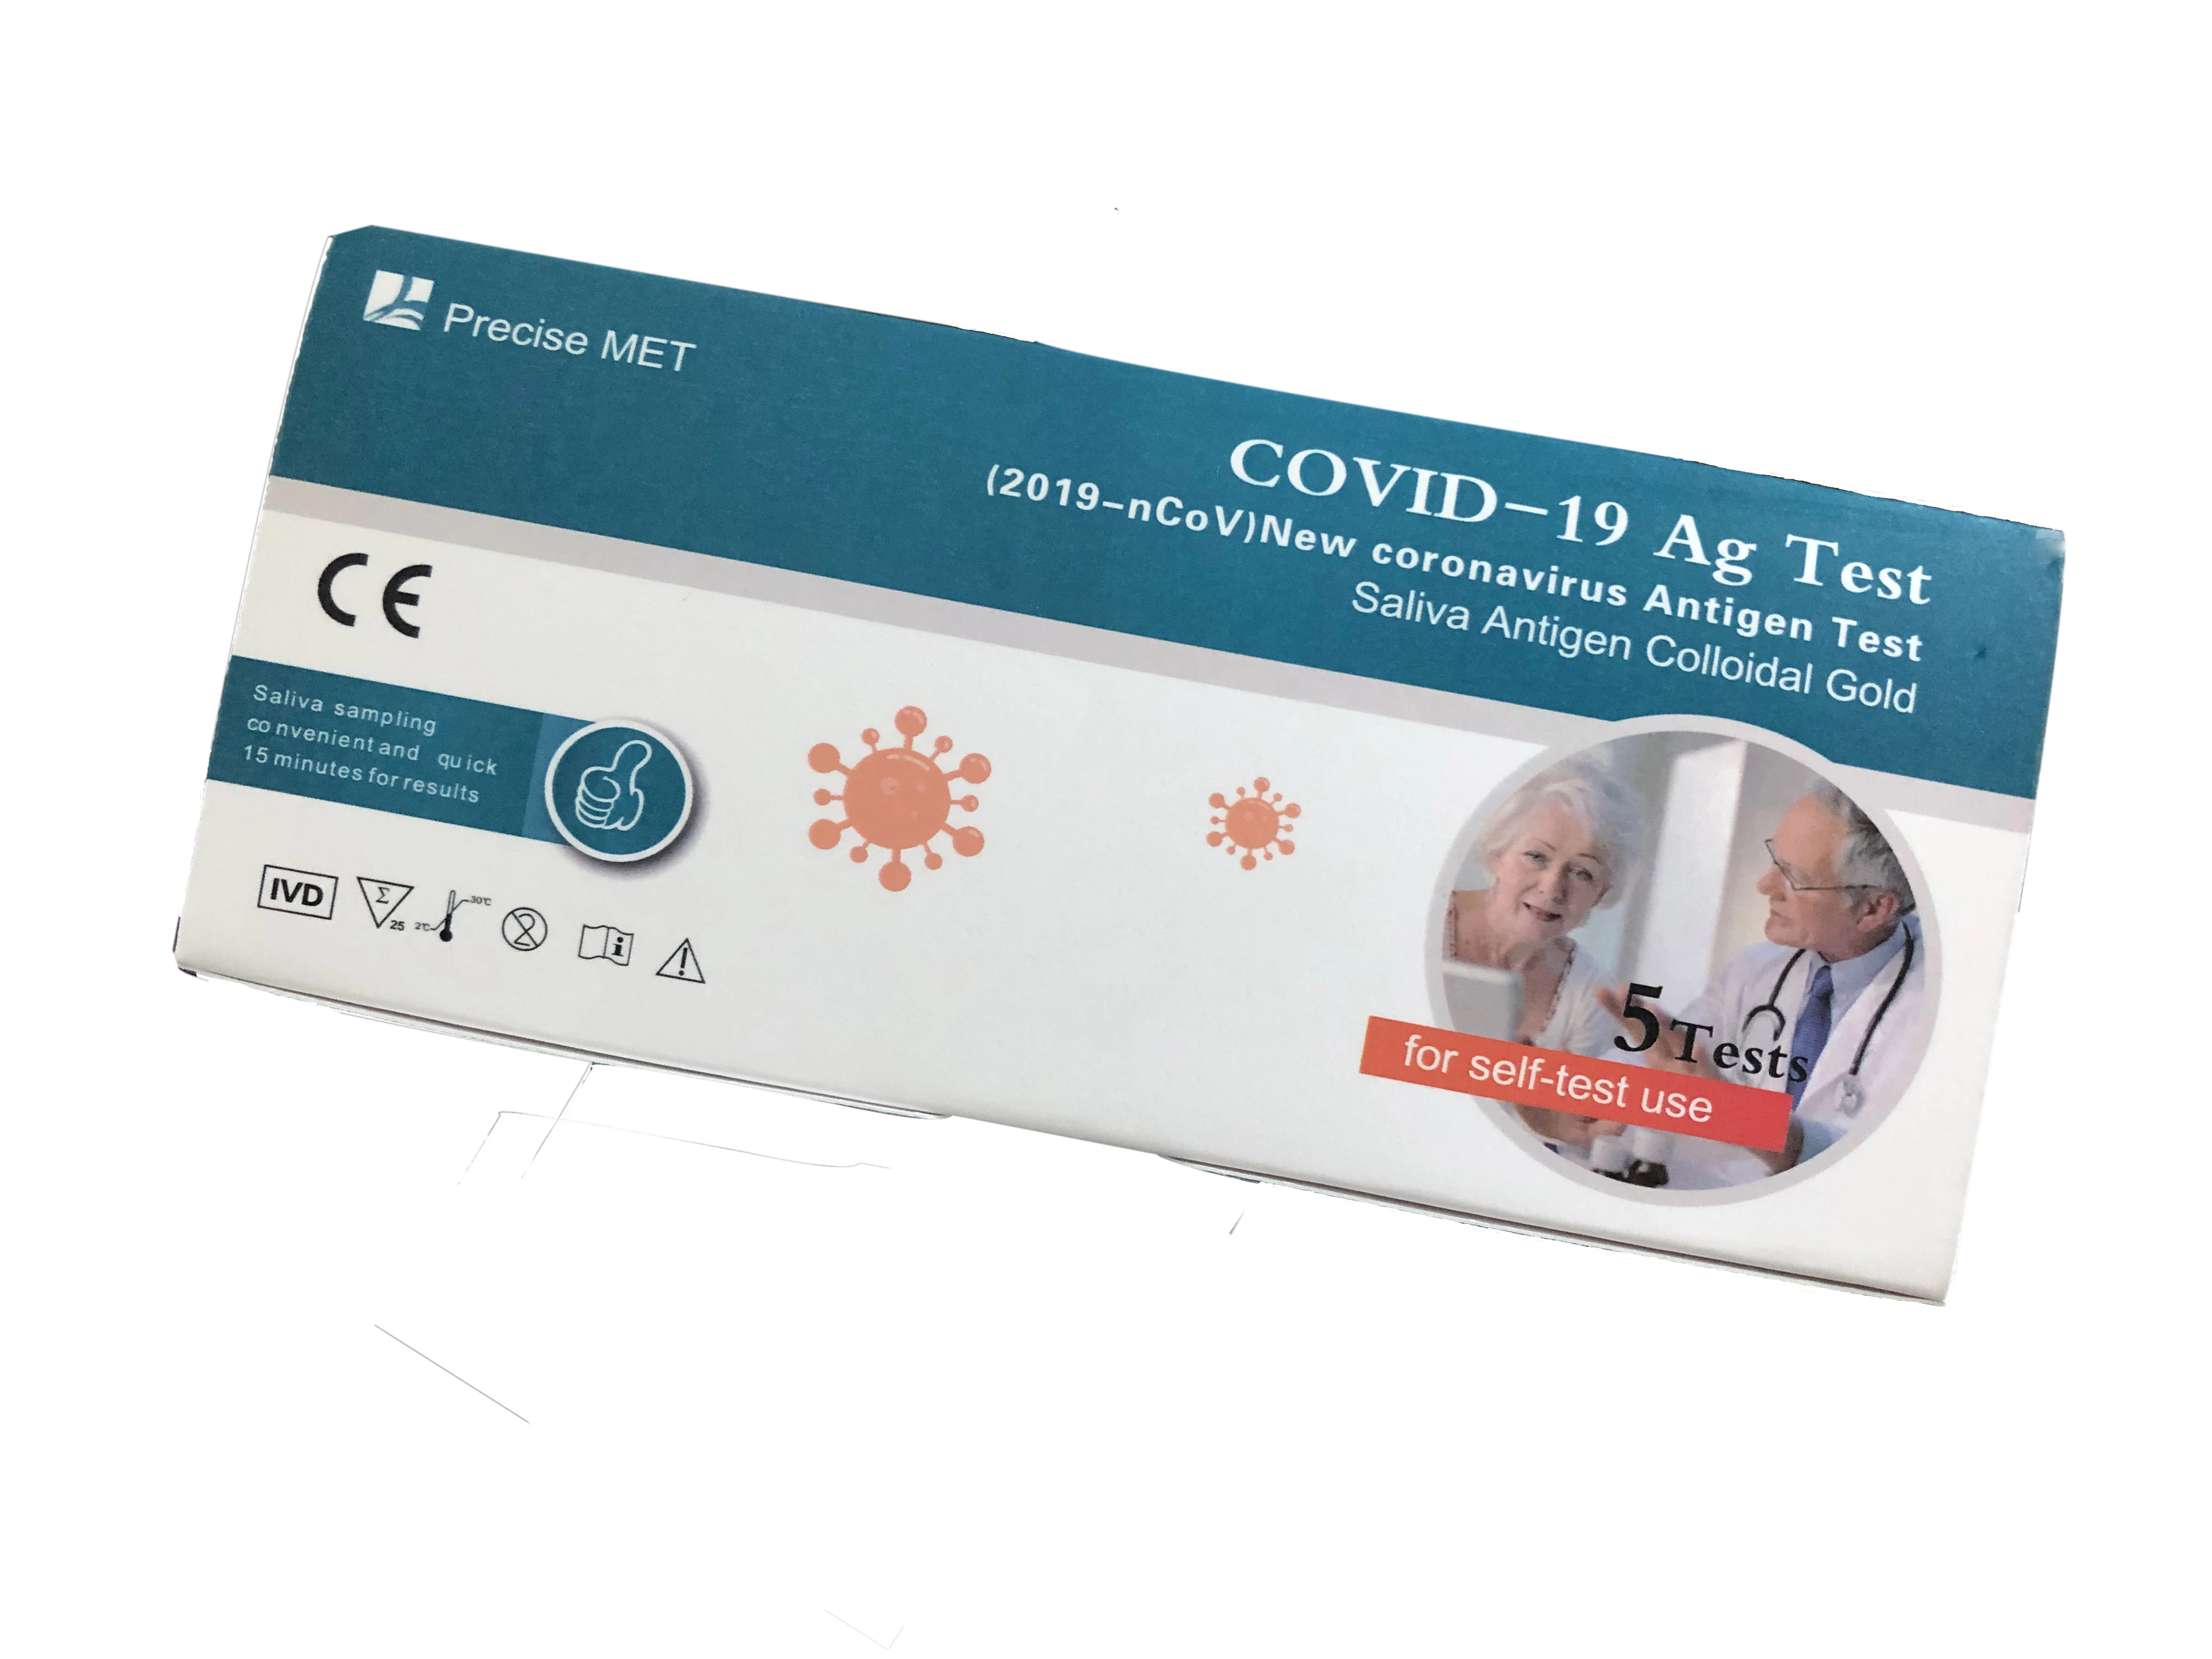 10 test/Saliva Antigen Test (Colloidal Gold)